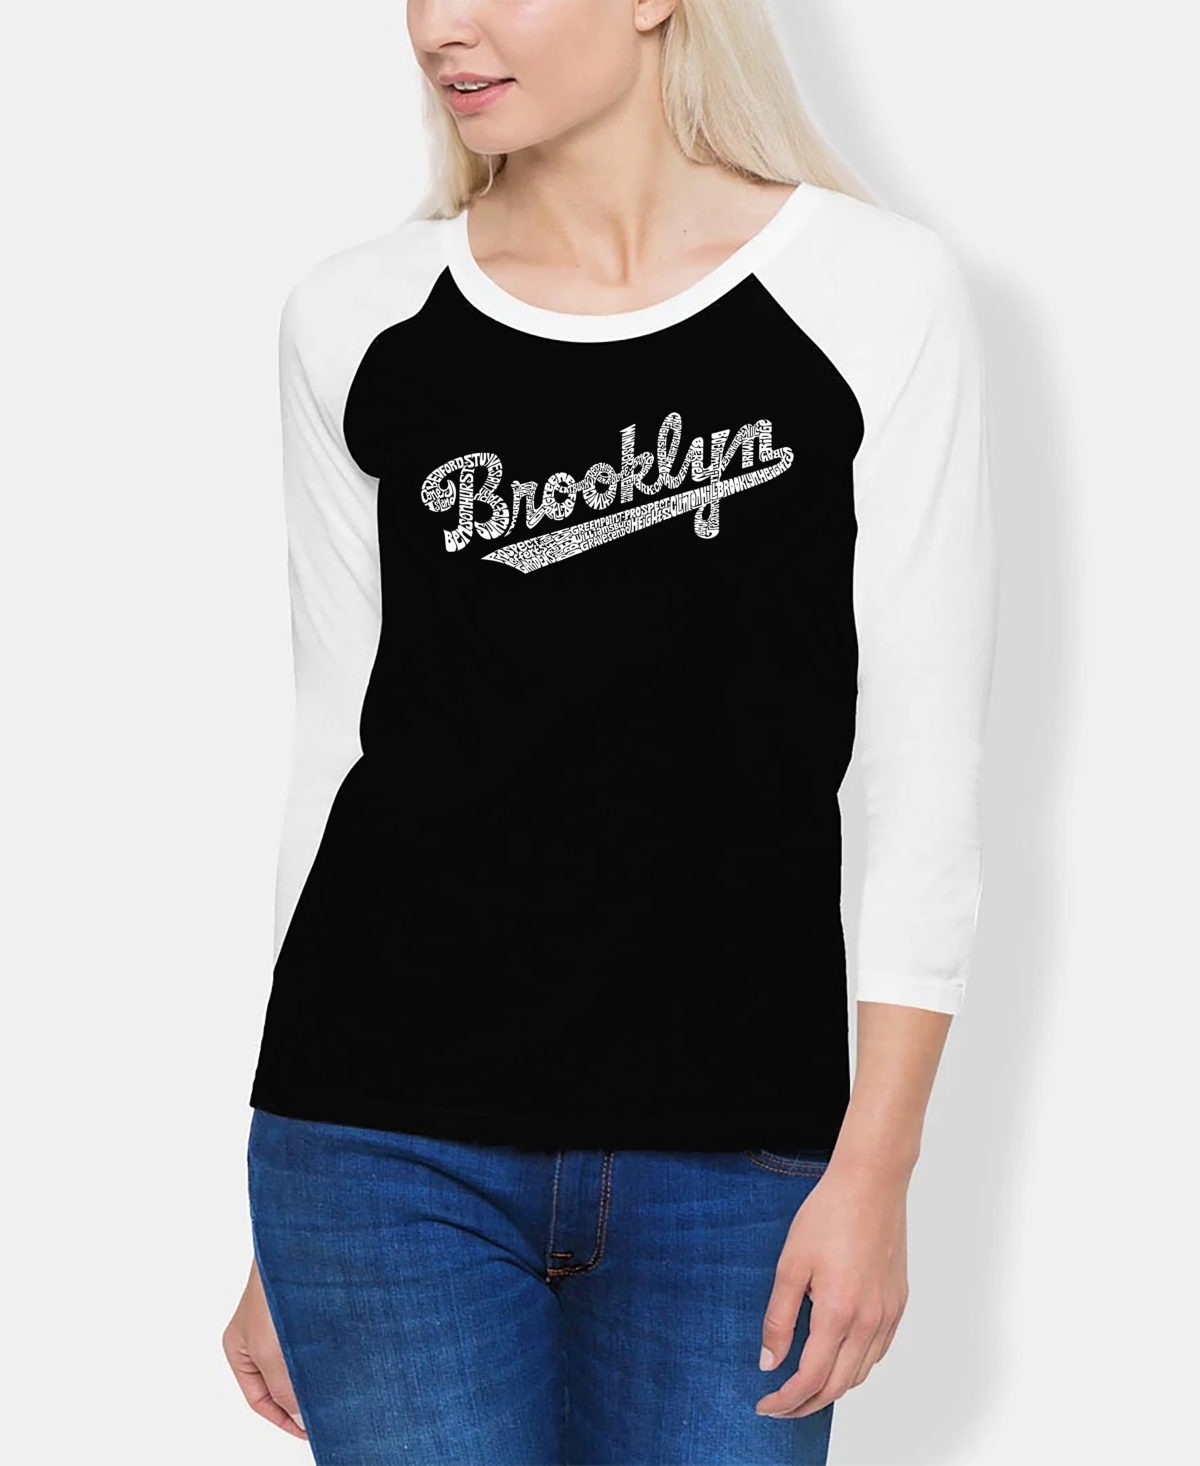 Women's Raglan Word Art Brooklyn Neighborhoods T-shirt - Black, White